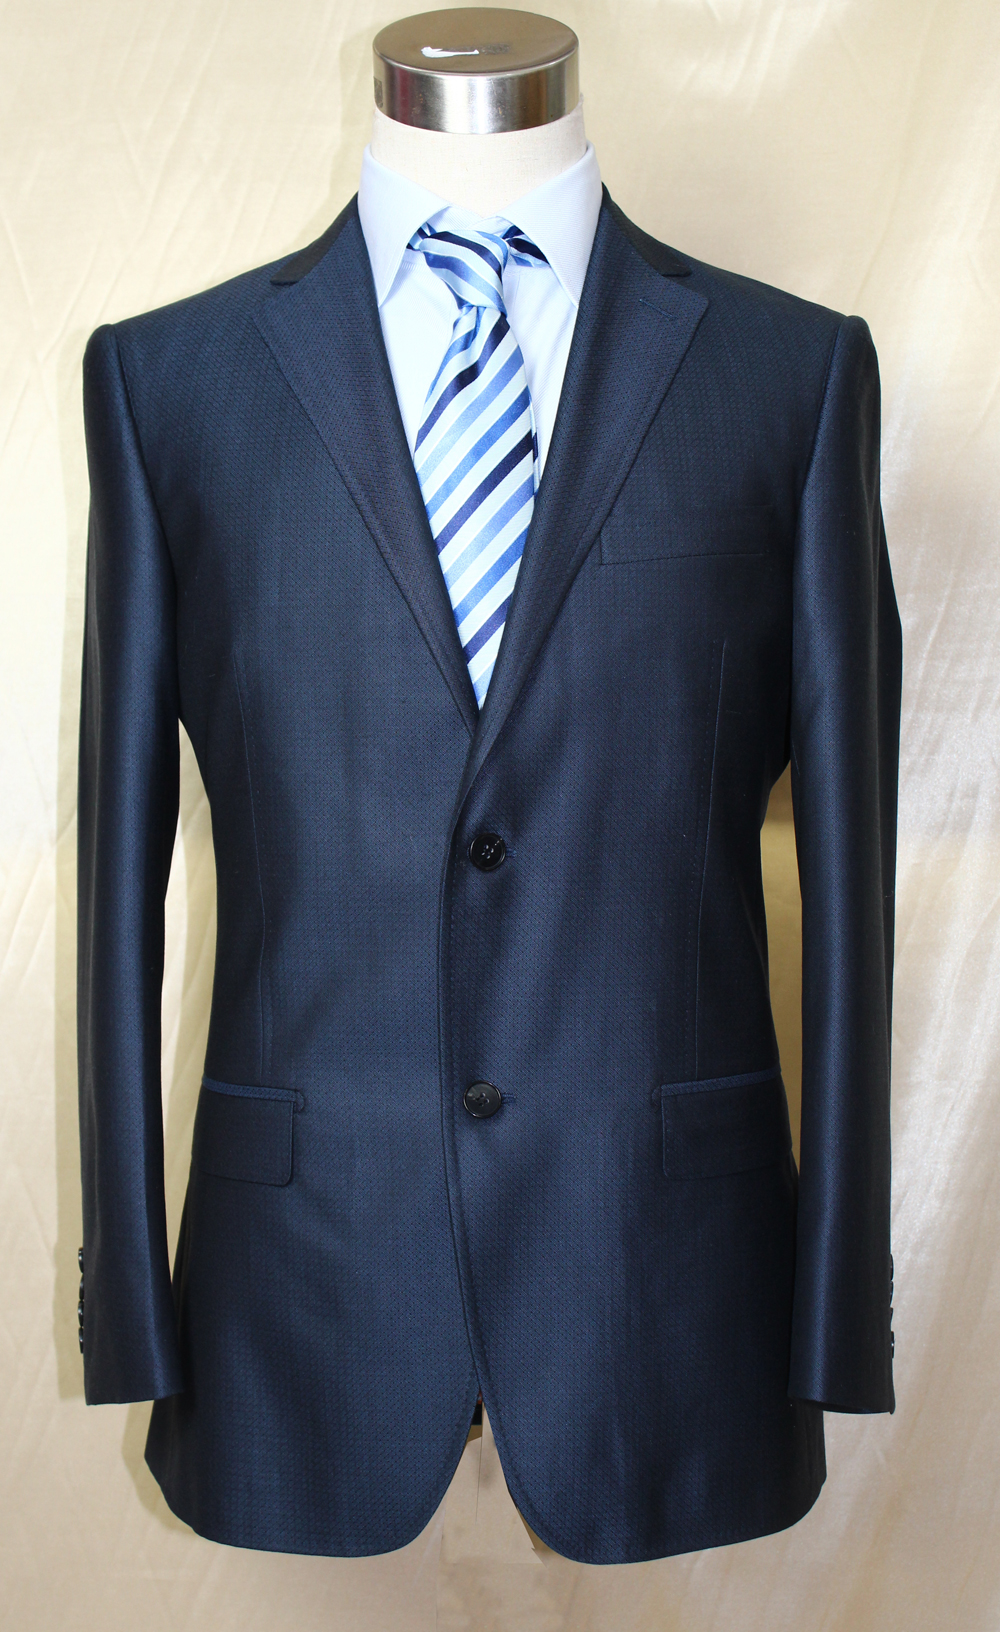 formal wedding suit for summer 
silk and wool fabric 

http://fashiondavid.taobao.com/search.htm?spm=a1z10.3.6-17599705218.35.UrgjLU&scid=244785857&scname=MTdERVNJTkVSUyAgyei8xsqm1%2FfGtw%3D%3D&checkedRange=true&queryType=cat